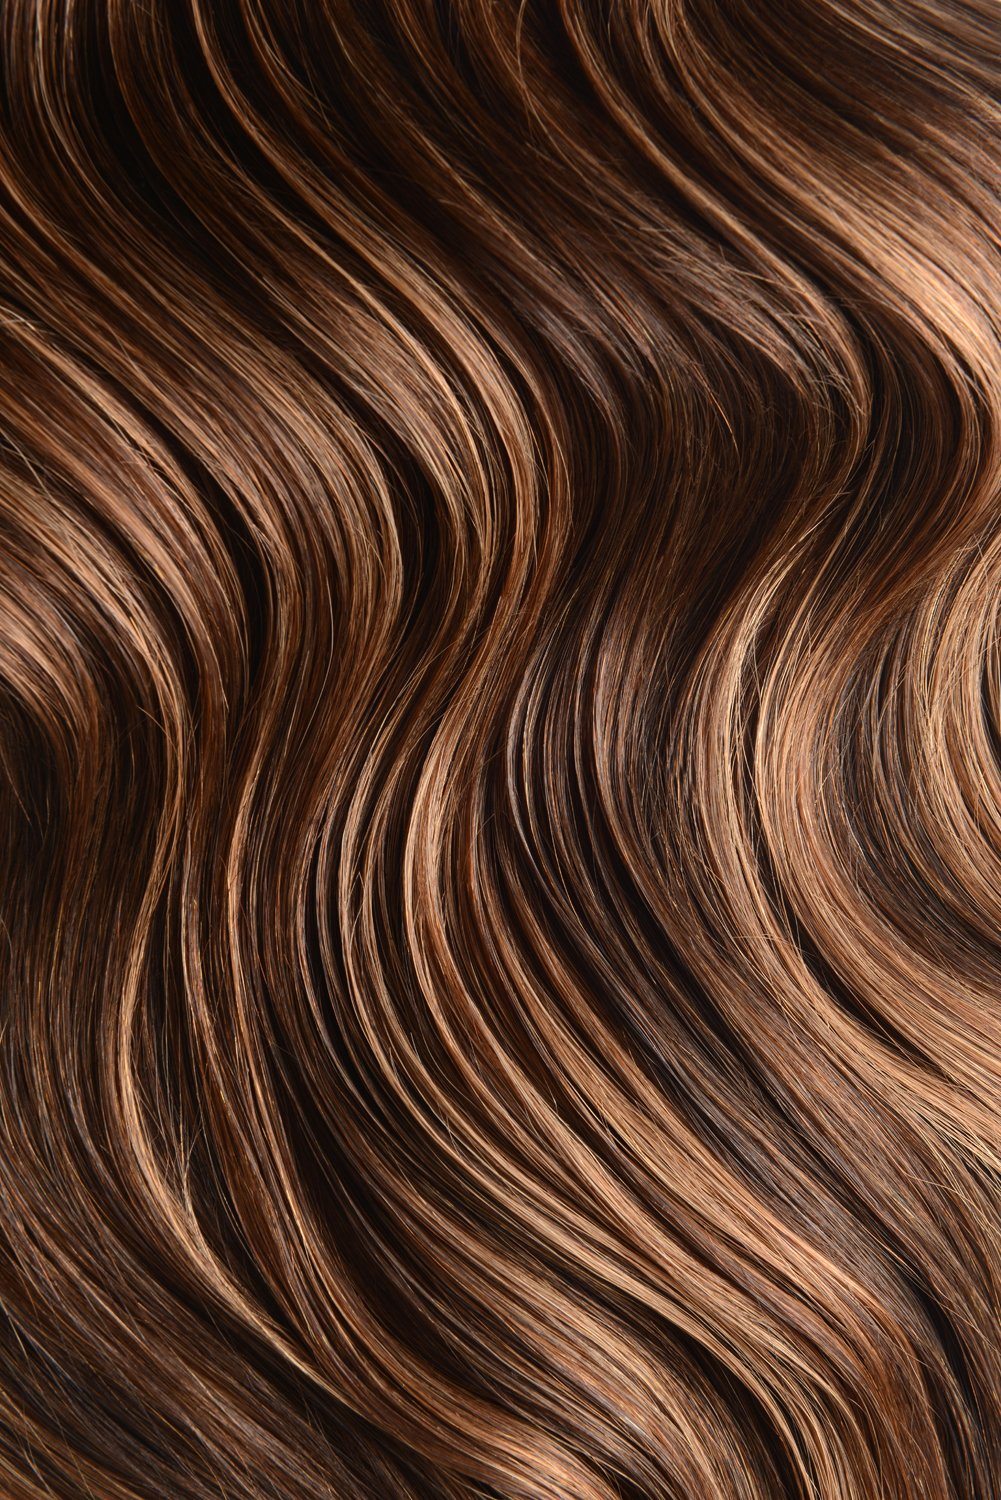 Full Head Remy Clip in Human Hair Extensions - Medium Brown/Auburn Mix (#4/30) Full Head Set cliphair 